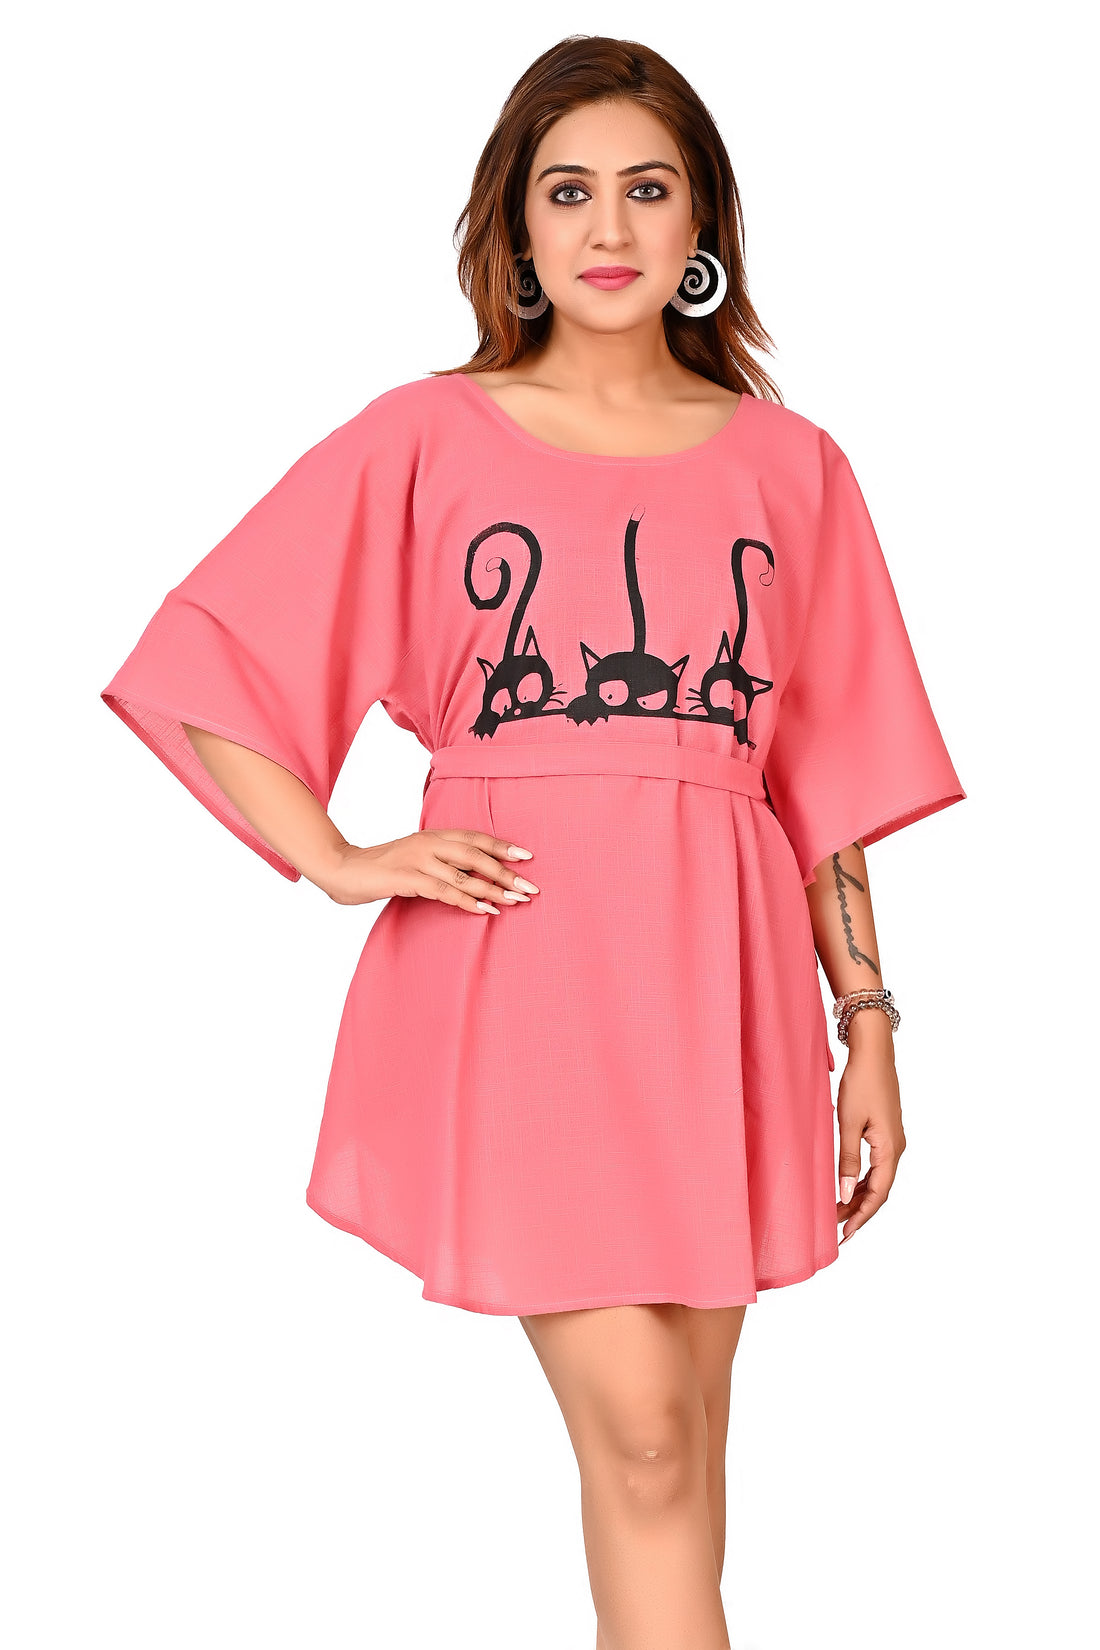 Nirmal online Premium Cotton Top for Women in Coral Pink Colour